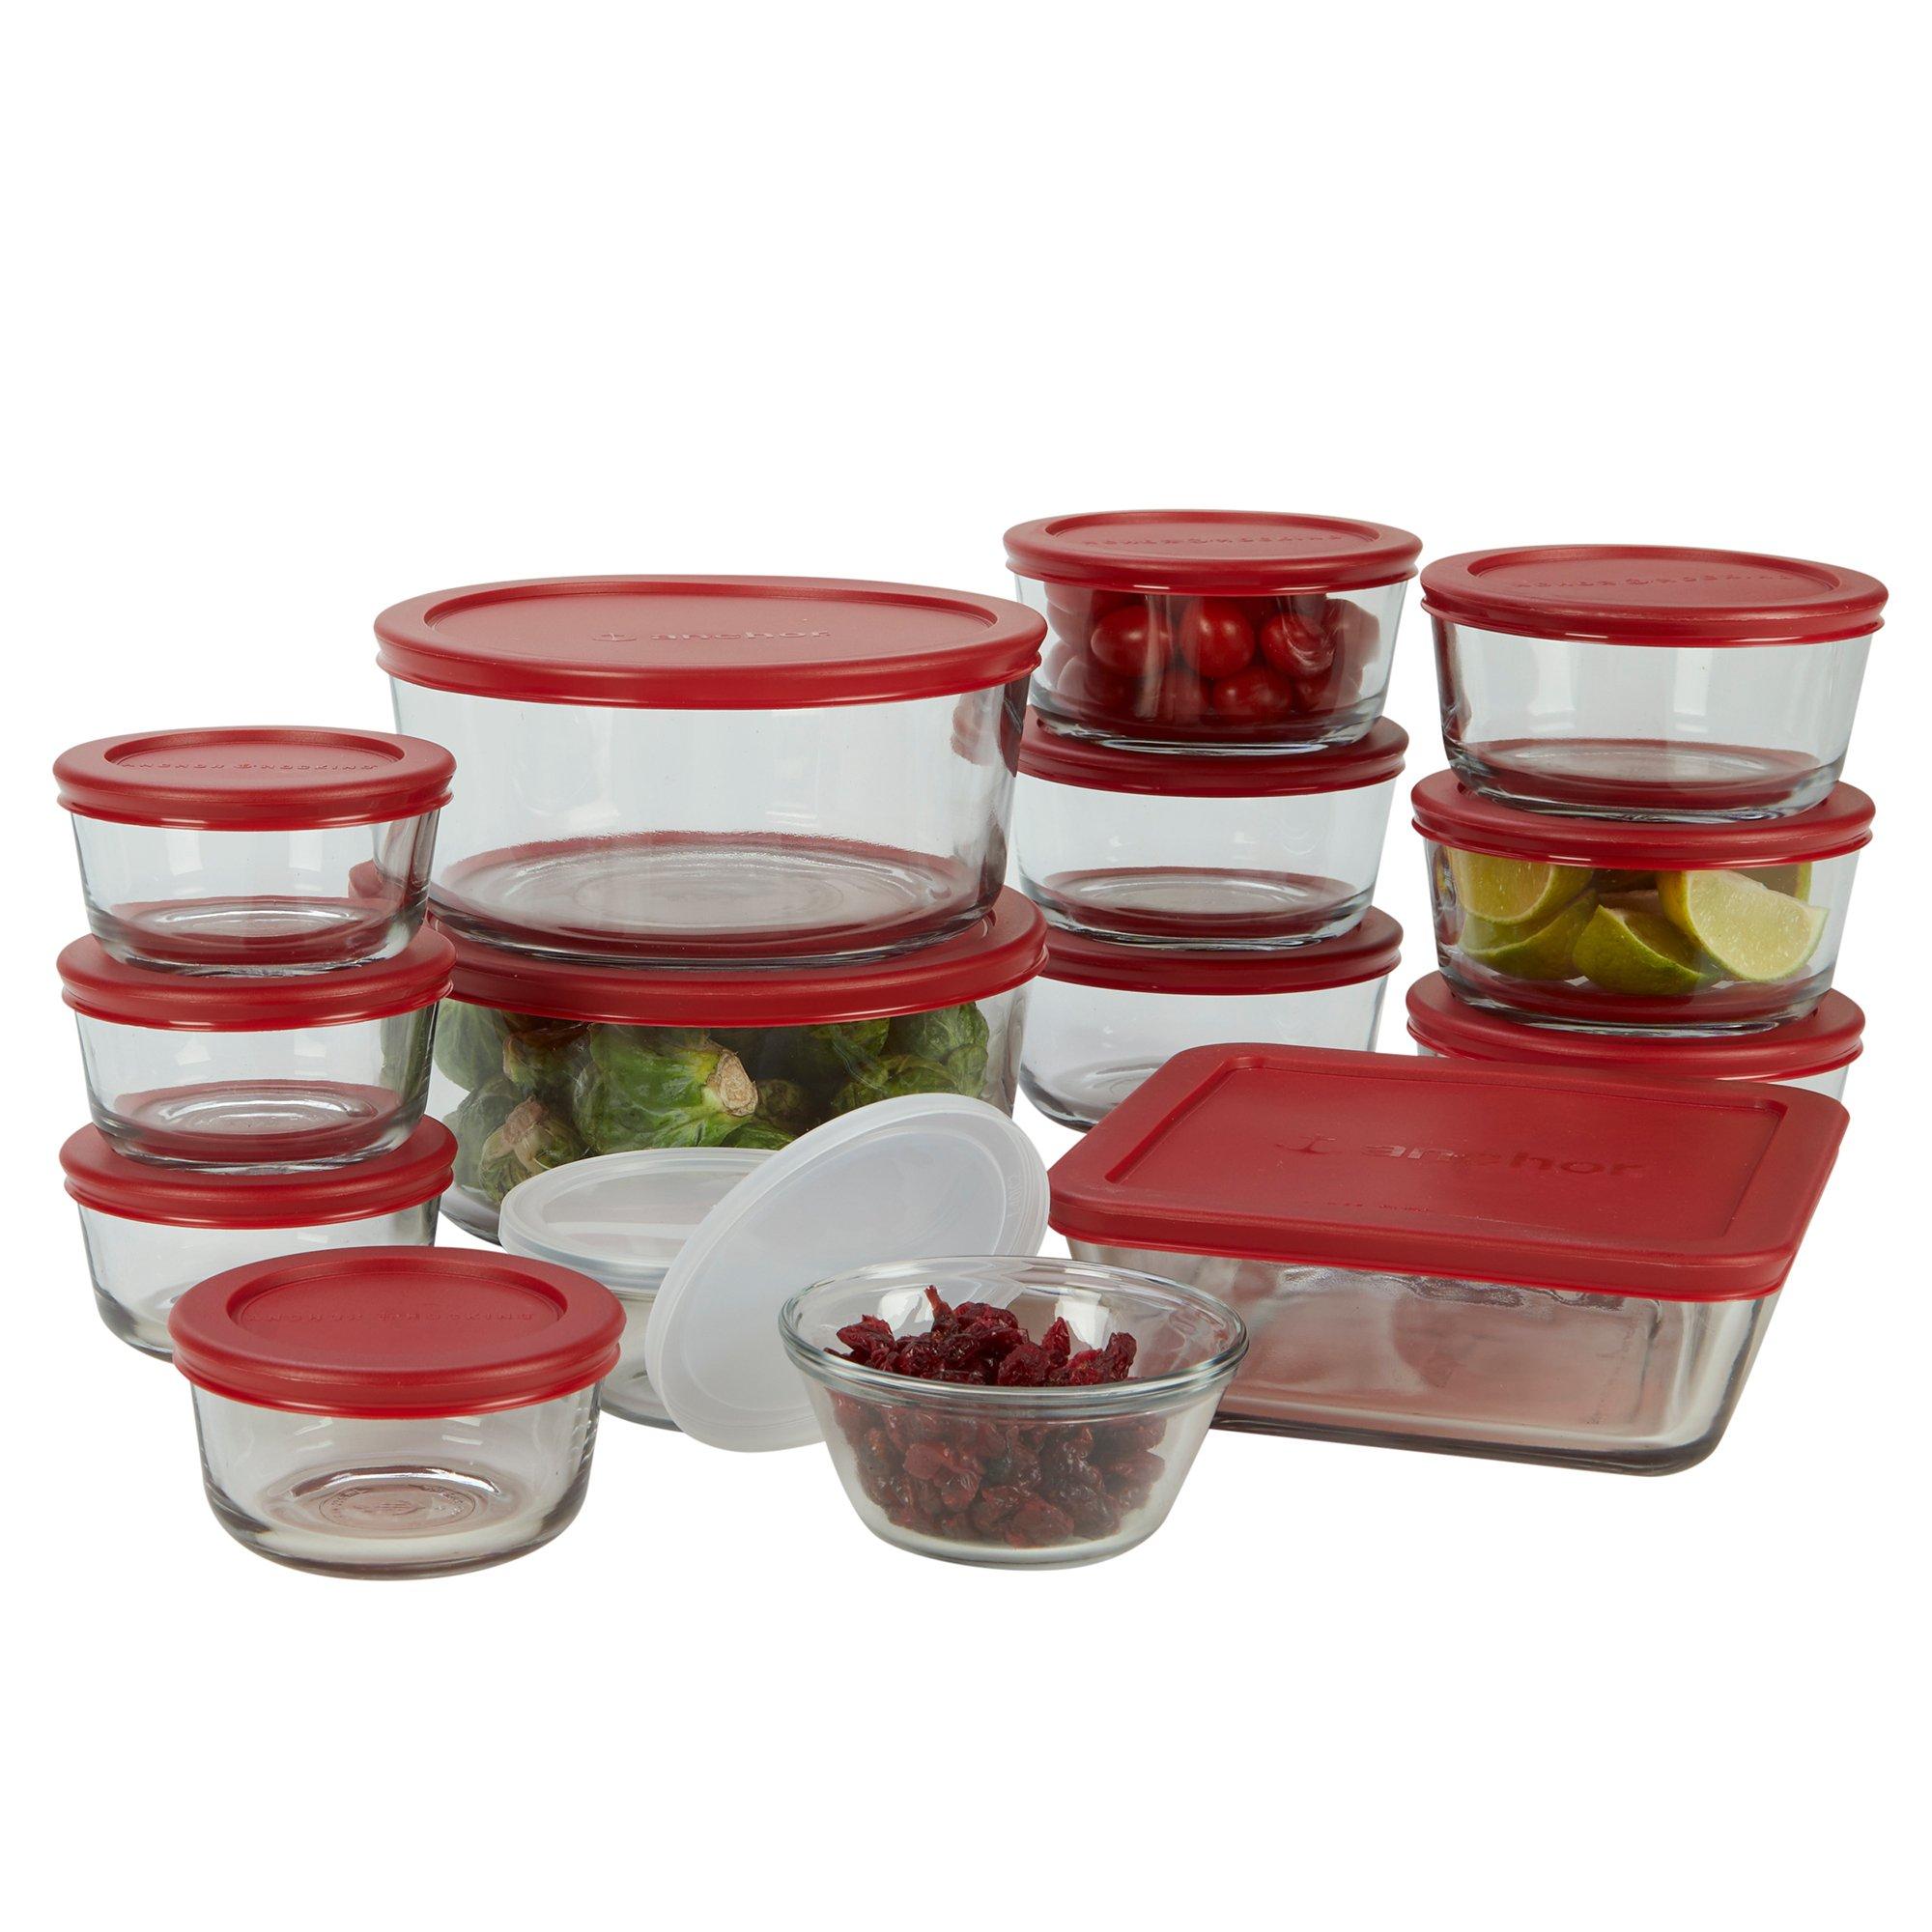 Anchor Hocking 6-Piece Glass Kitchen Food Storage Set with Red Lids